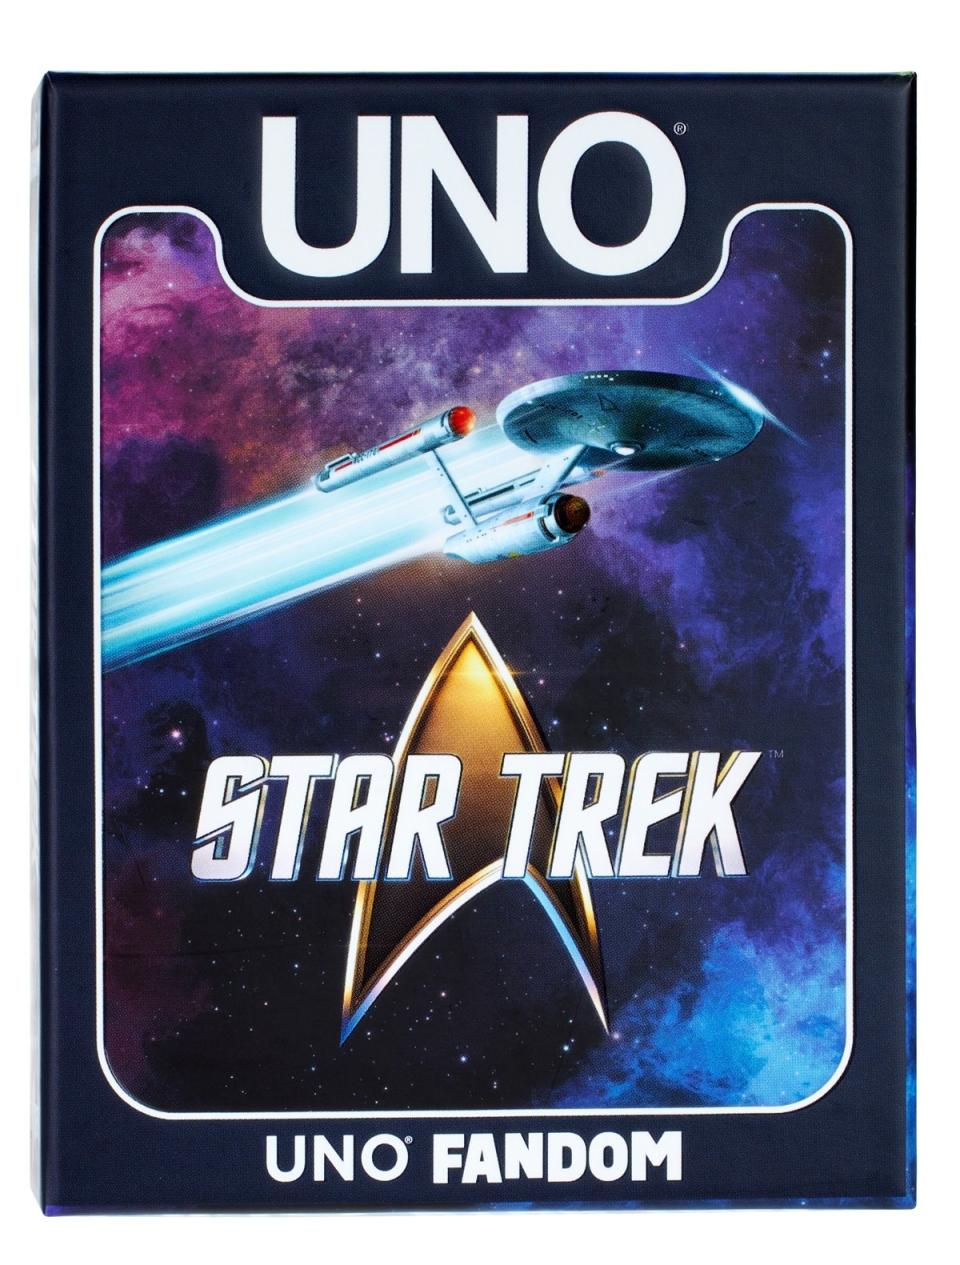 Packaging art for the UNO Fandom Star Trek deck, featuring the Starship Enterprise.